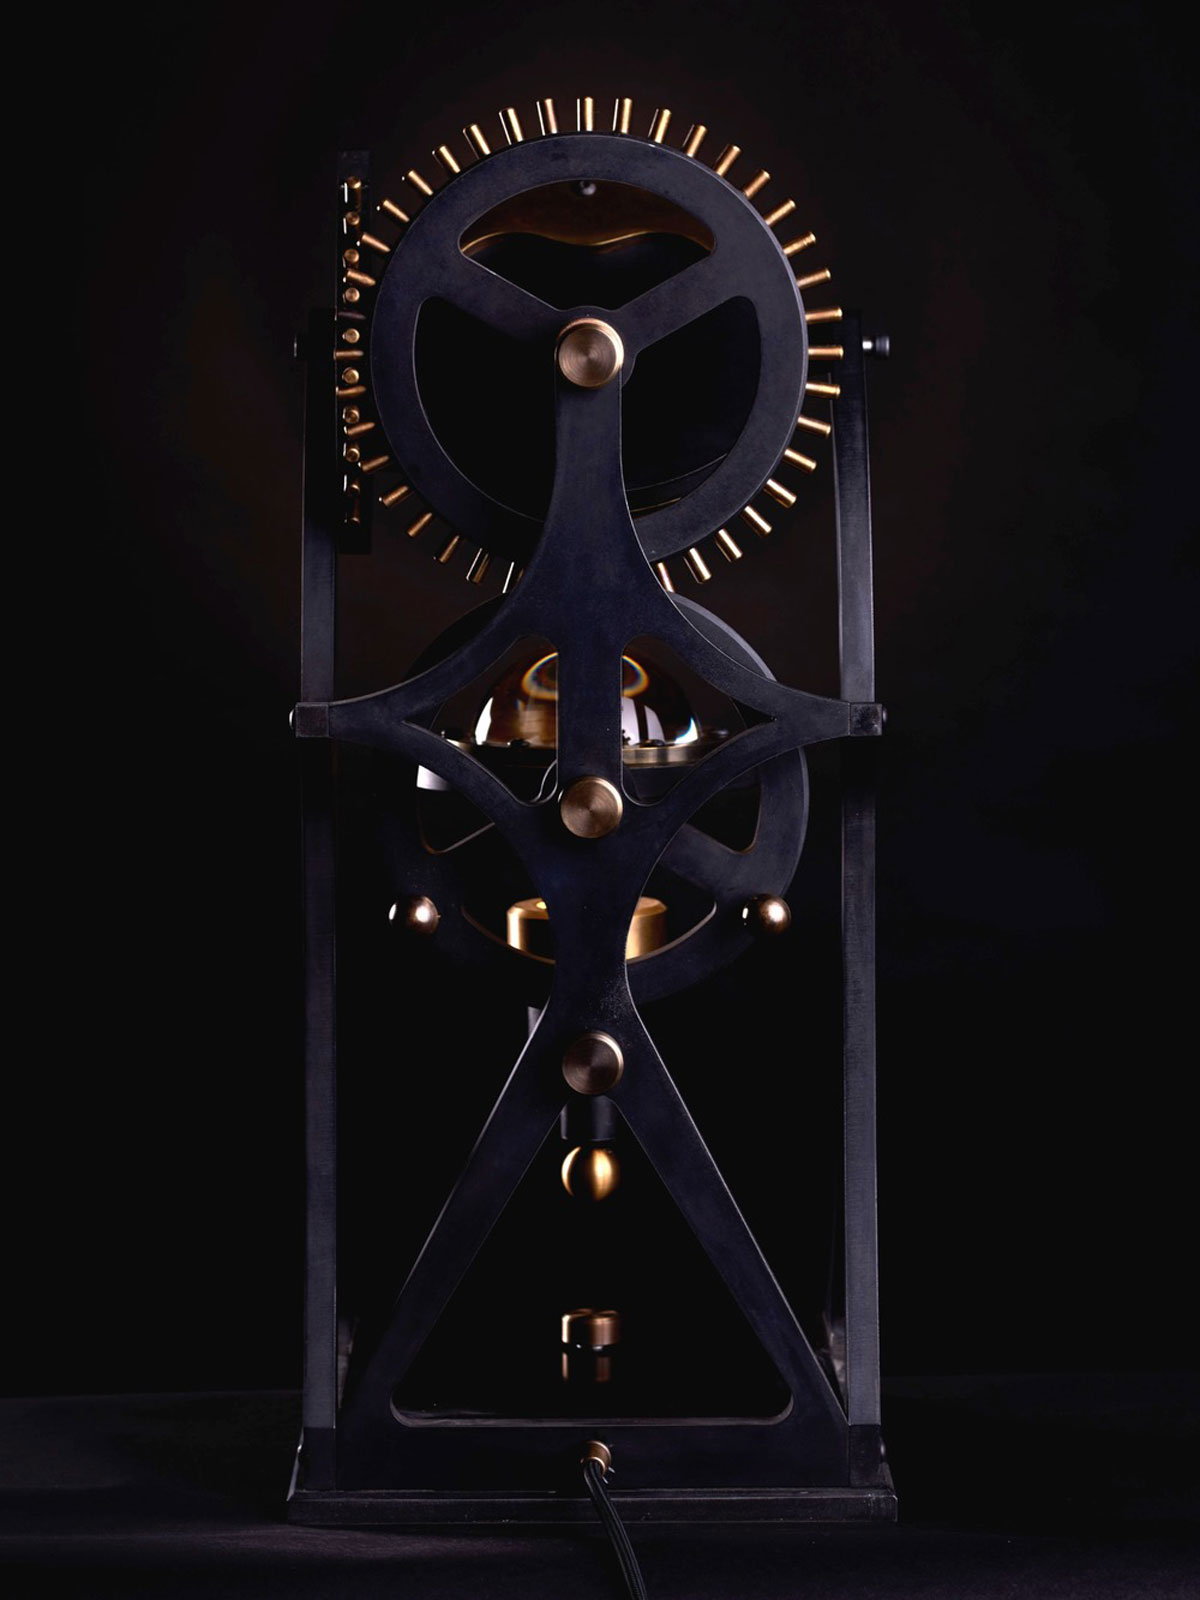 Vitruvian Lamp by Karice Enterpise - Da Vinci Lighting Collection